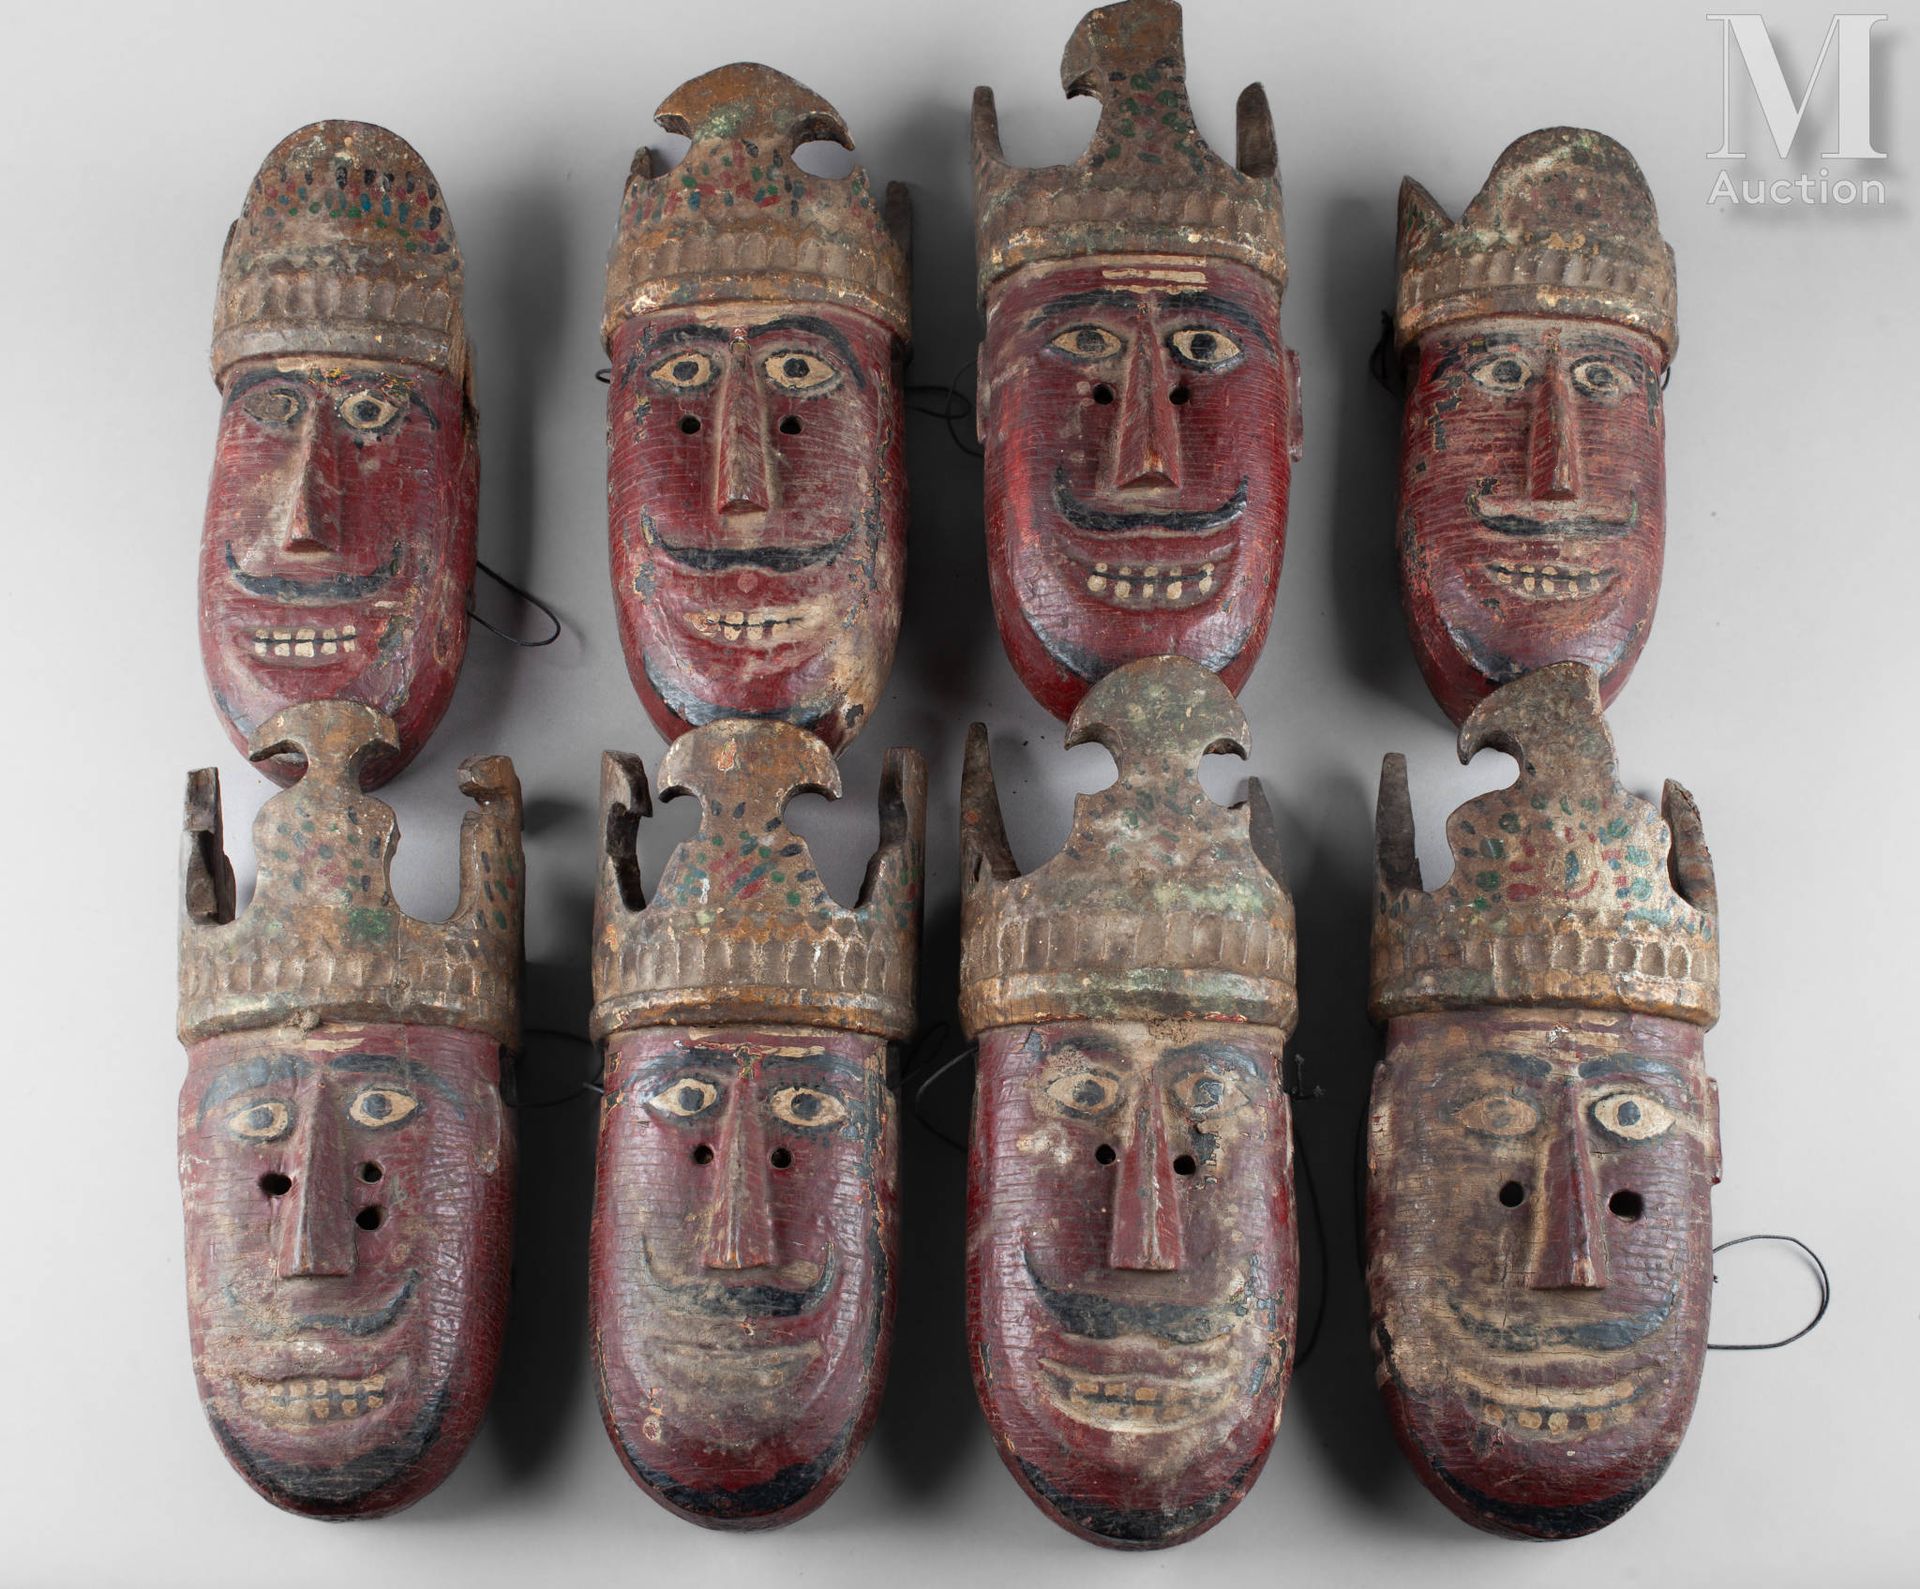 Huit masques En madera policromada
Nepal
Altura: unos 30 cm